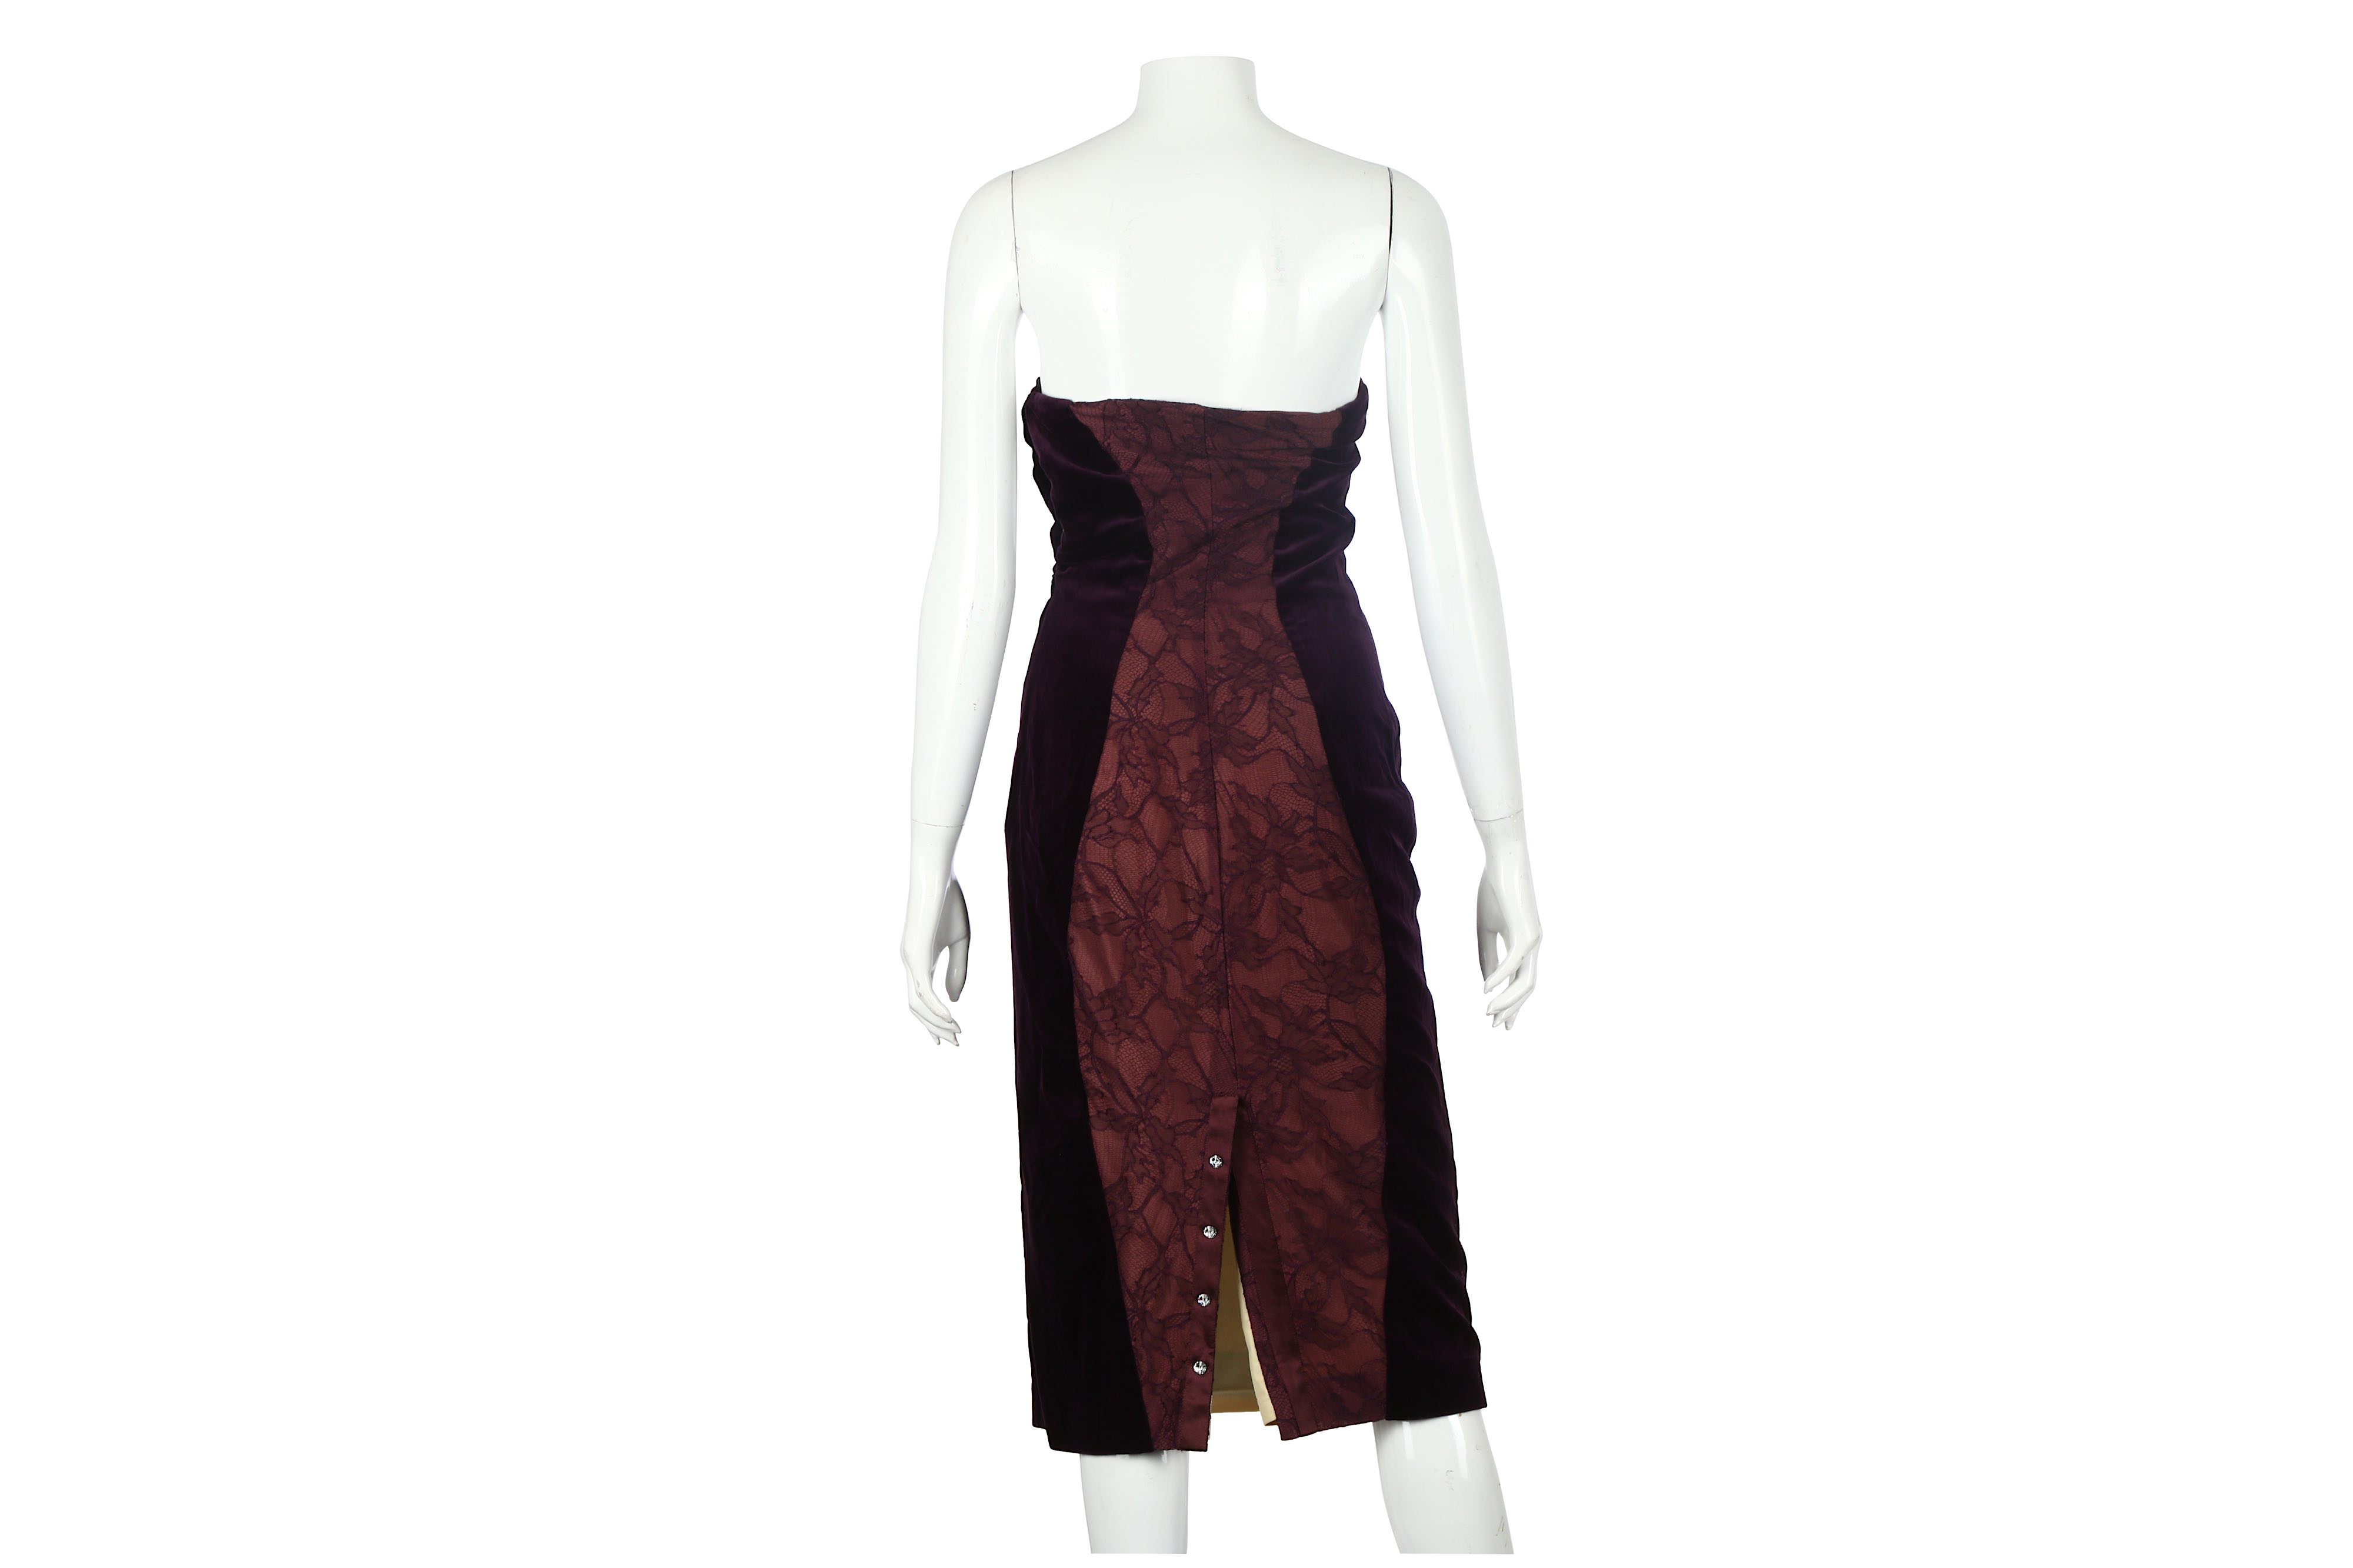 Paco Rabanne Purple Strapless Dress - Image 2 of 3